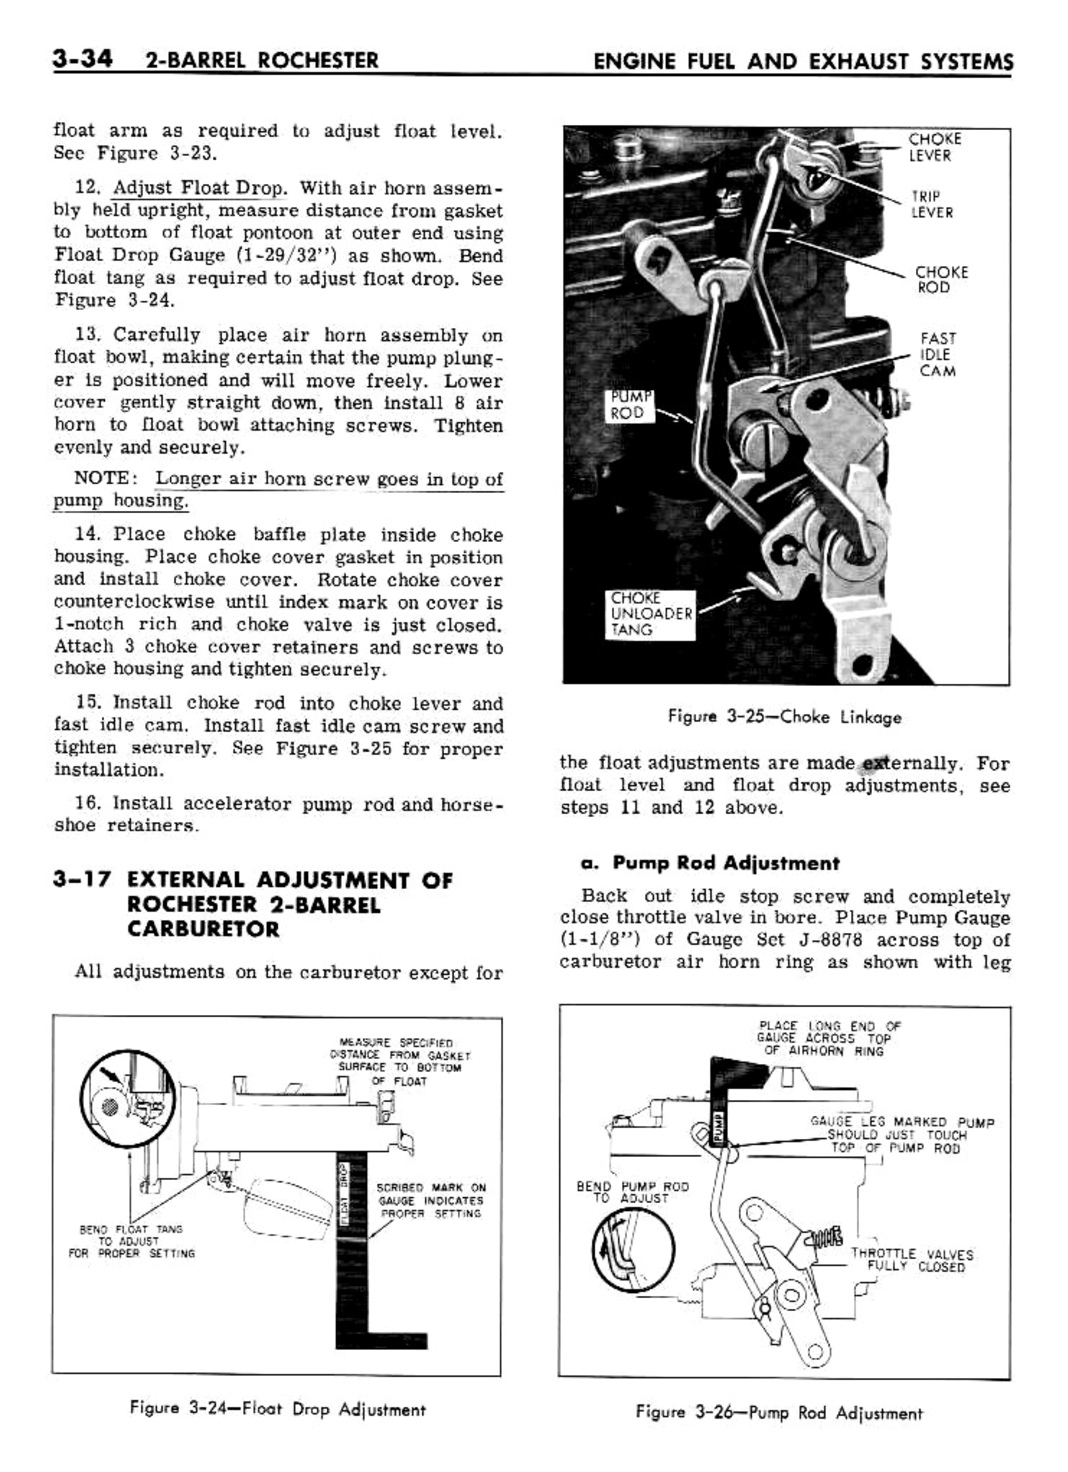 n_04 1961 Buick Shop Manual - Engine Fuel & Exhaust-034-034.jpg